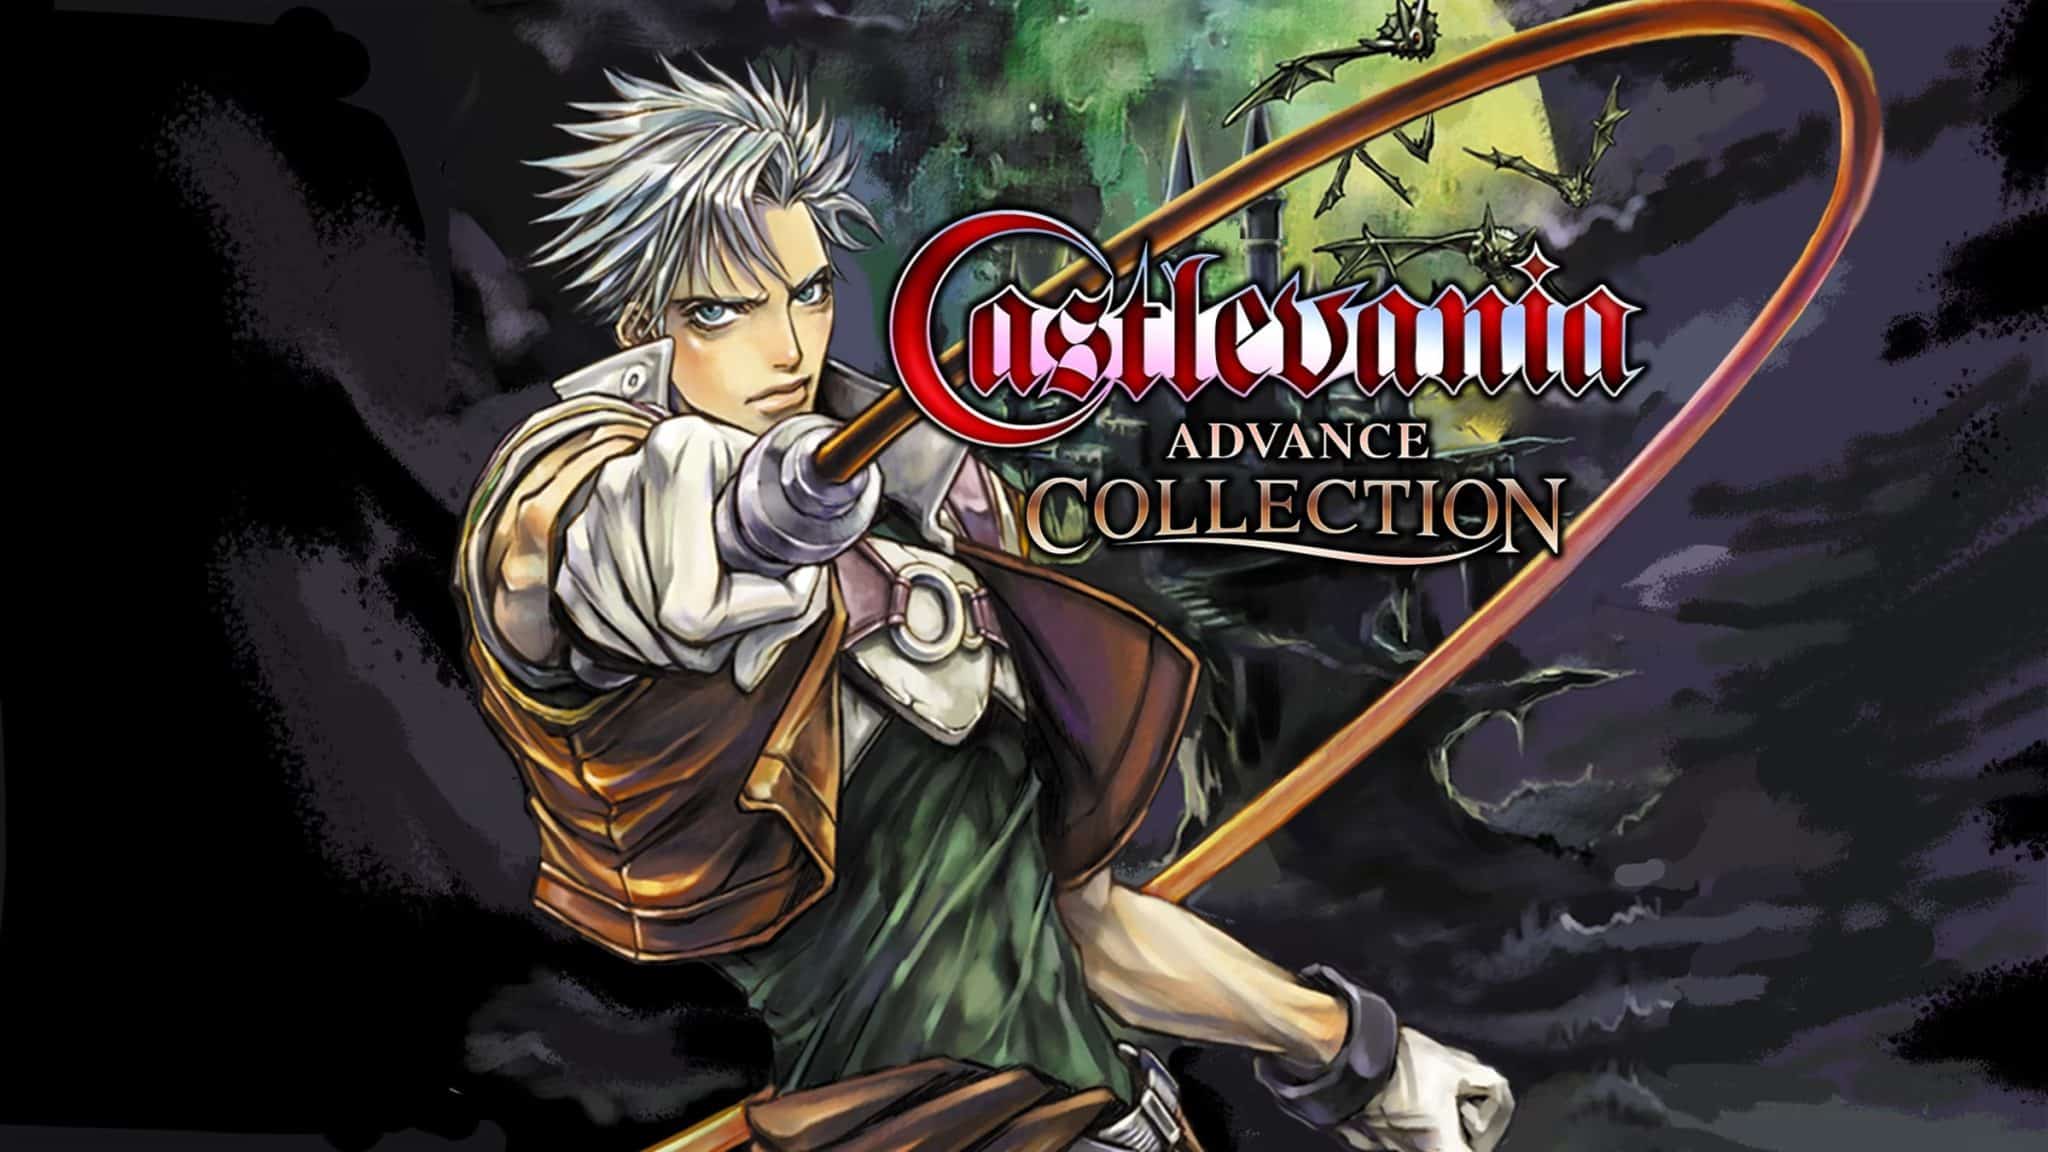 https://limitedrungames.com/it/collections/castlevania advance collection